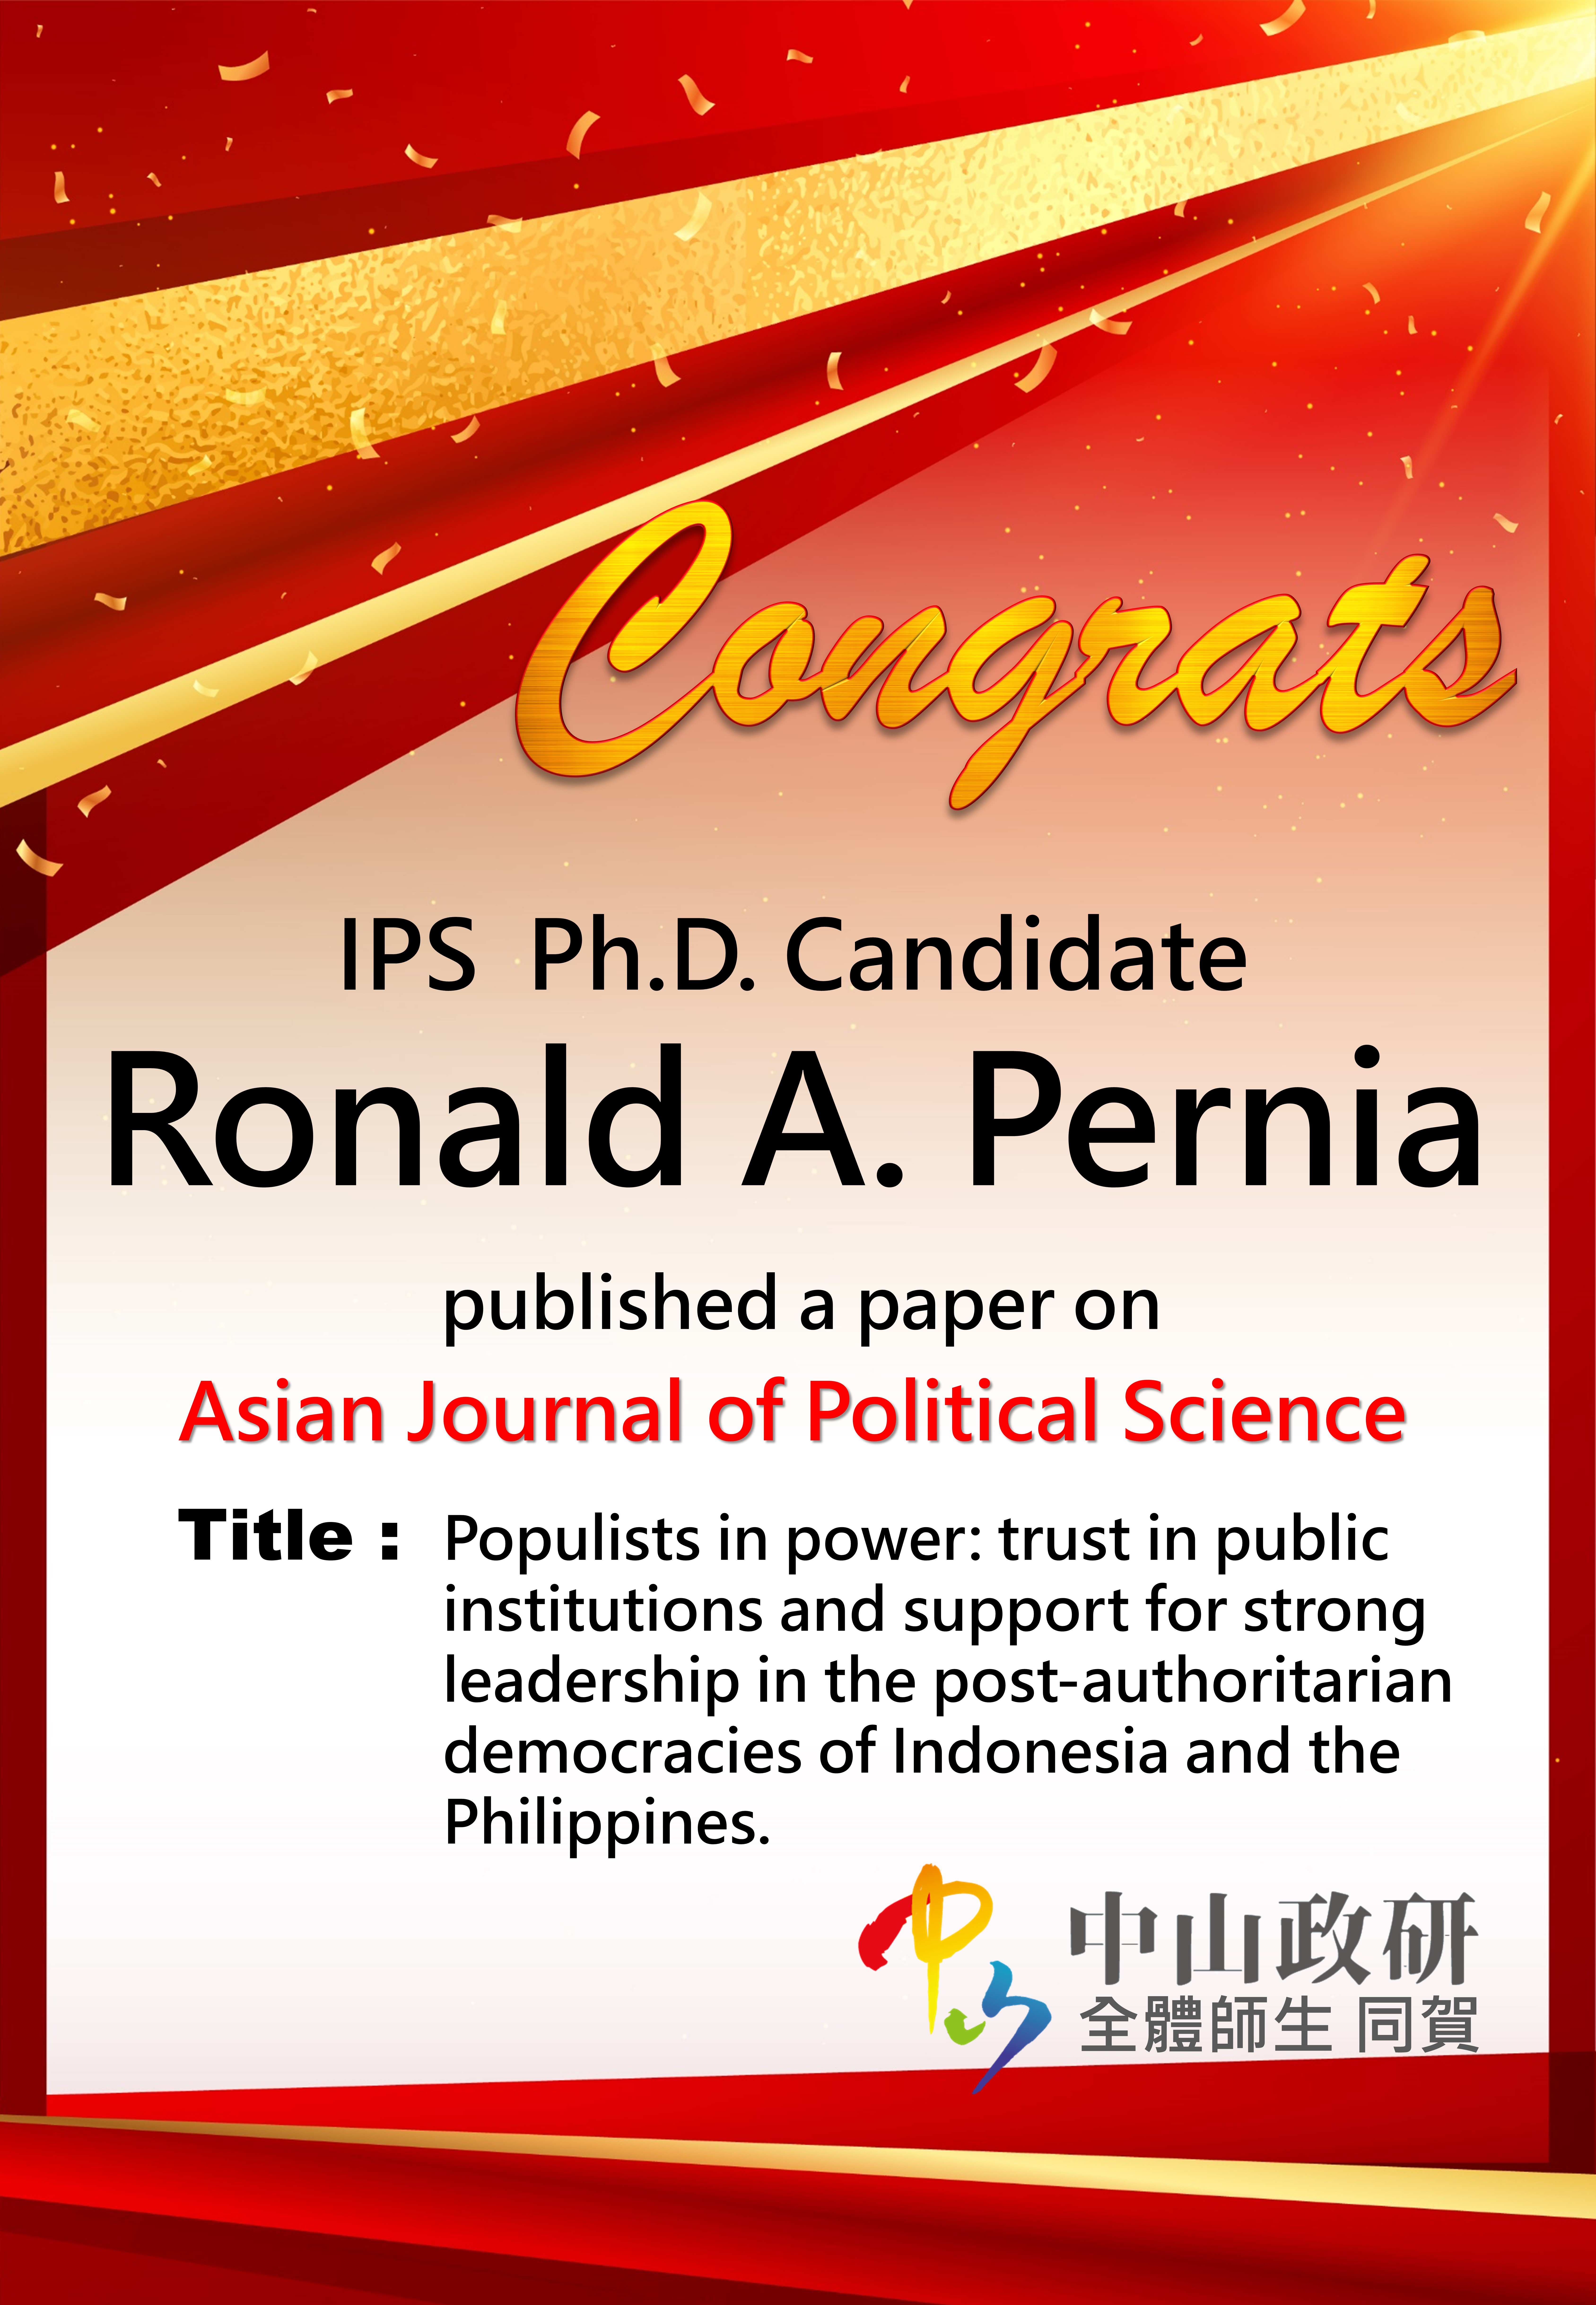 恭賀本所博士候選人Ronald A. Pernia於 Asian Journal of Political Science獲刊登論文